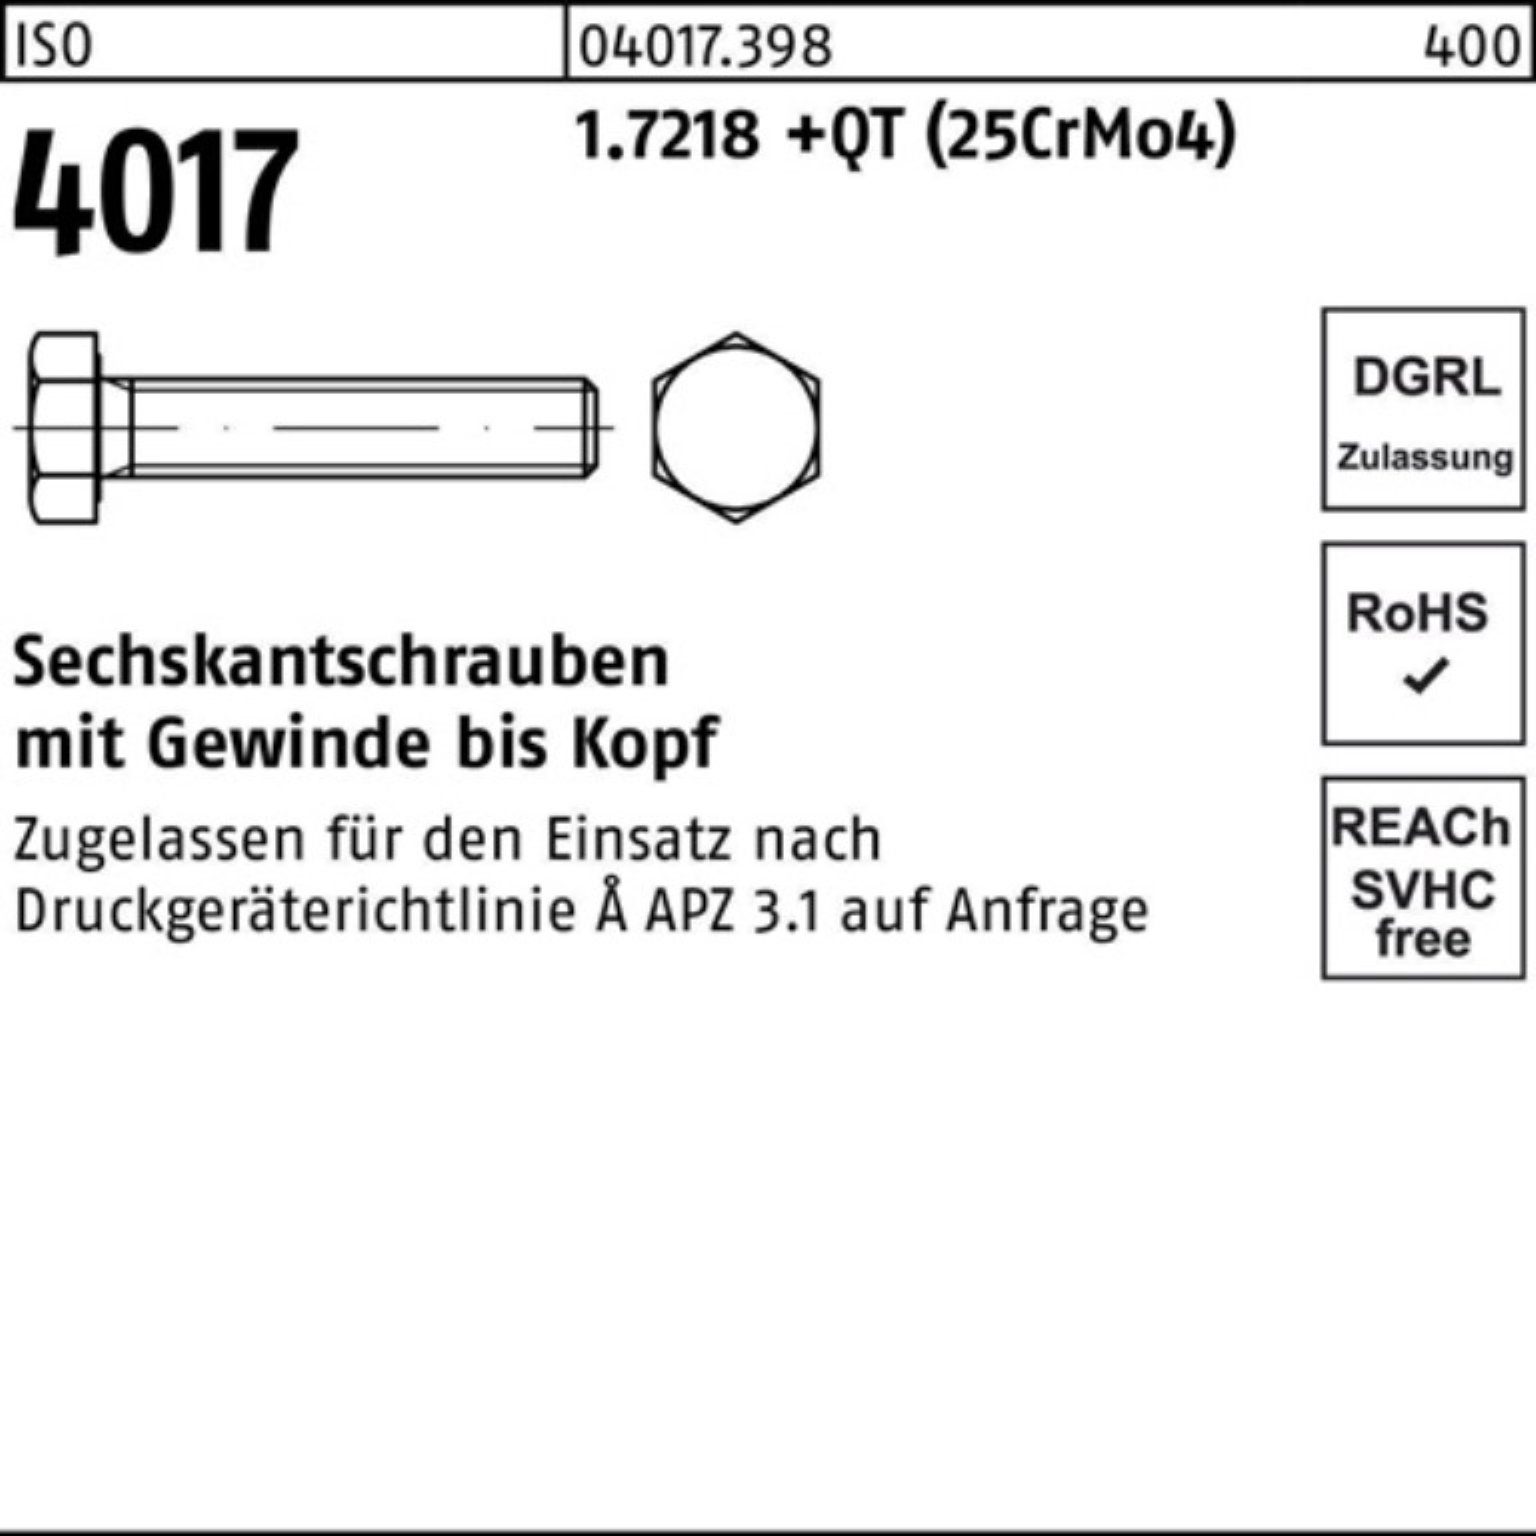 Bufab Sechskantschraube 100er Pack ISO 4017 70 +QT VG (25CrMo4) 1.7218 M27x Sechskantschraube